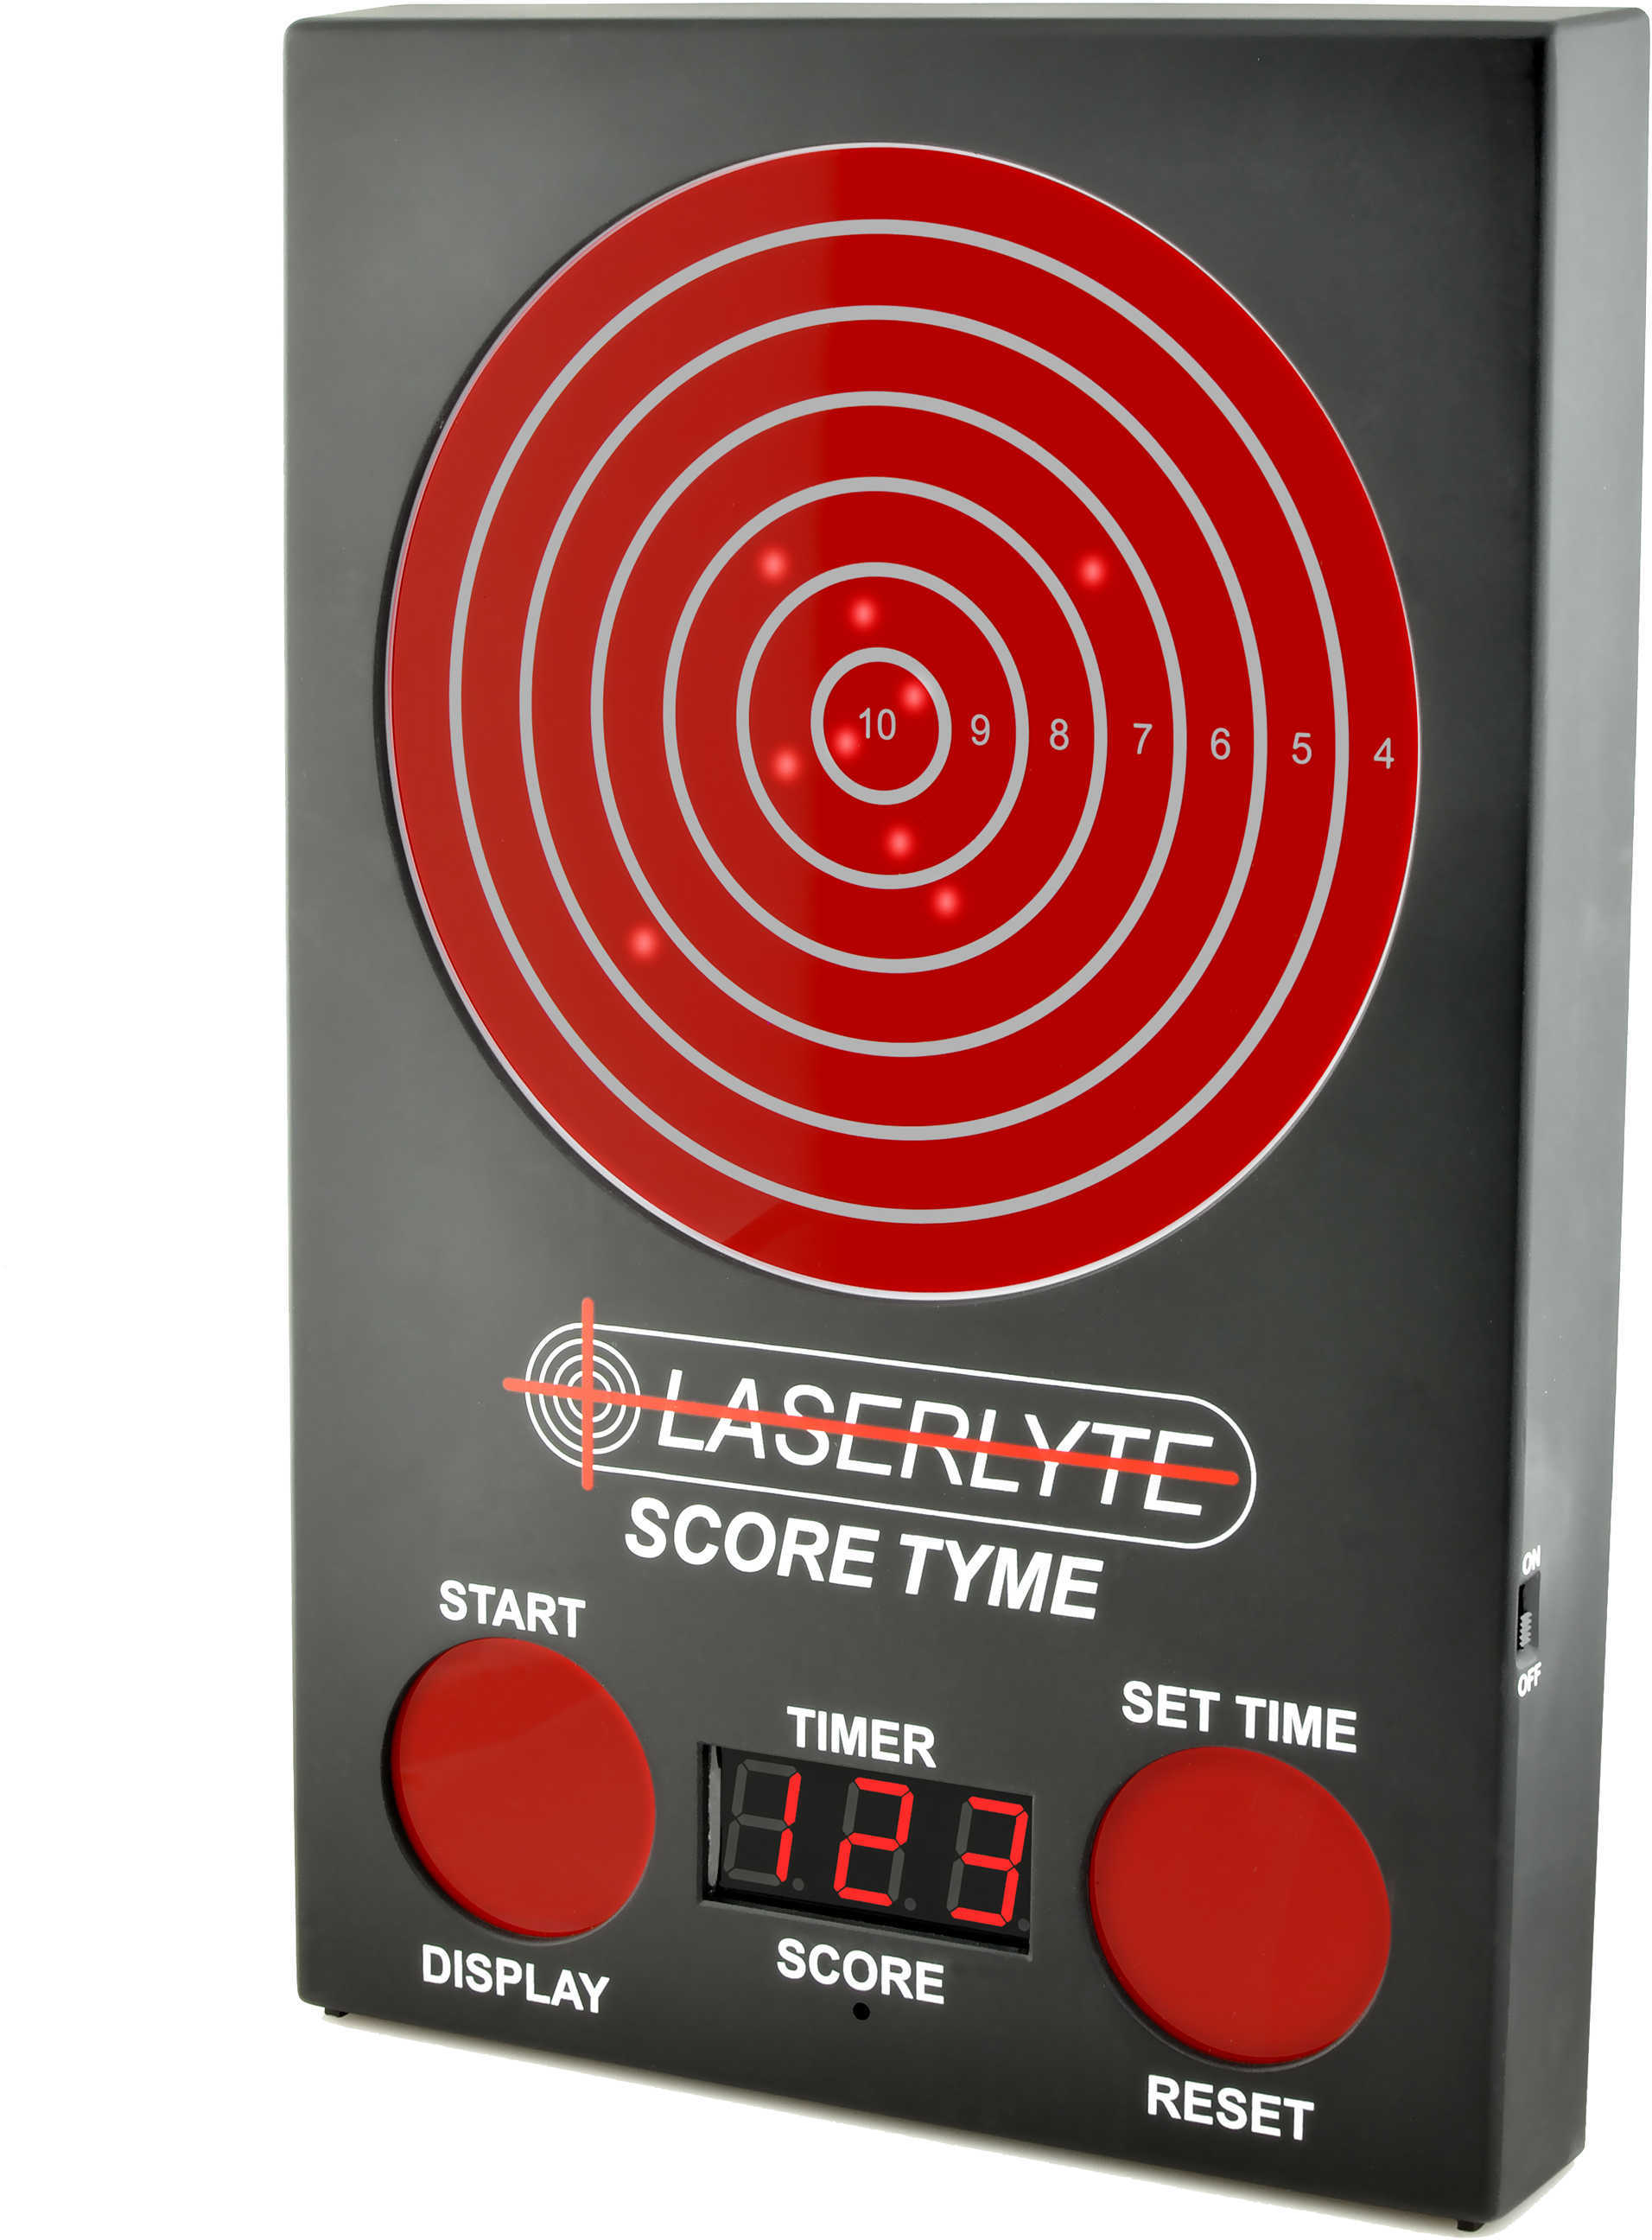 Laserlyte Score TYME Target